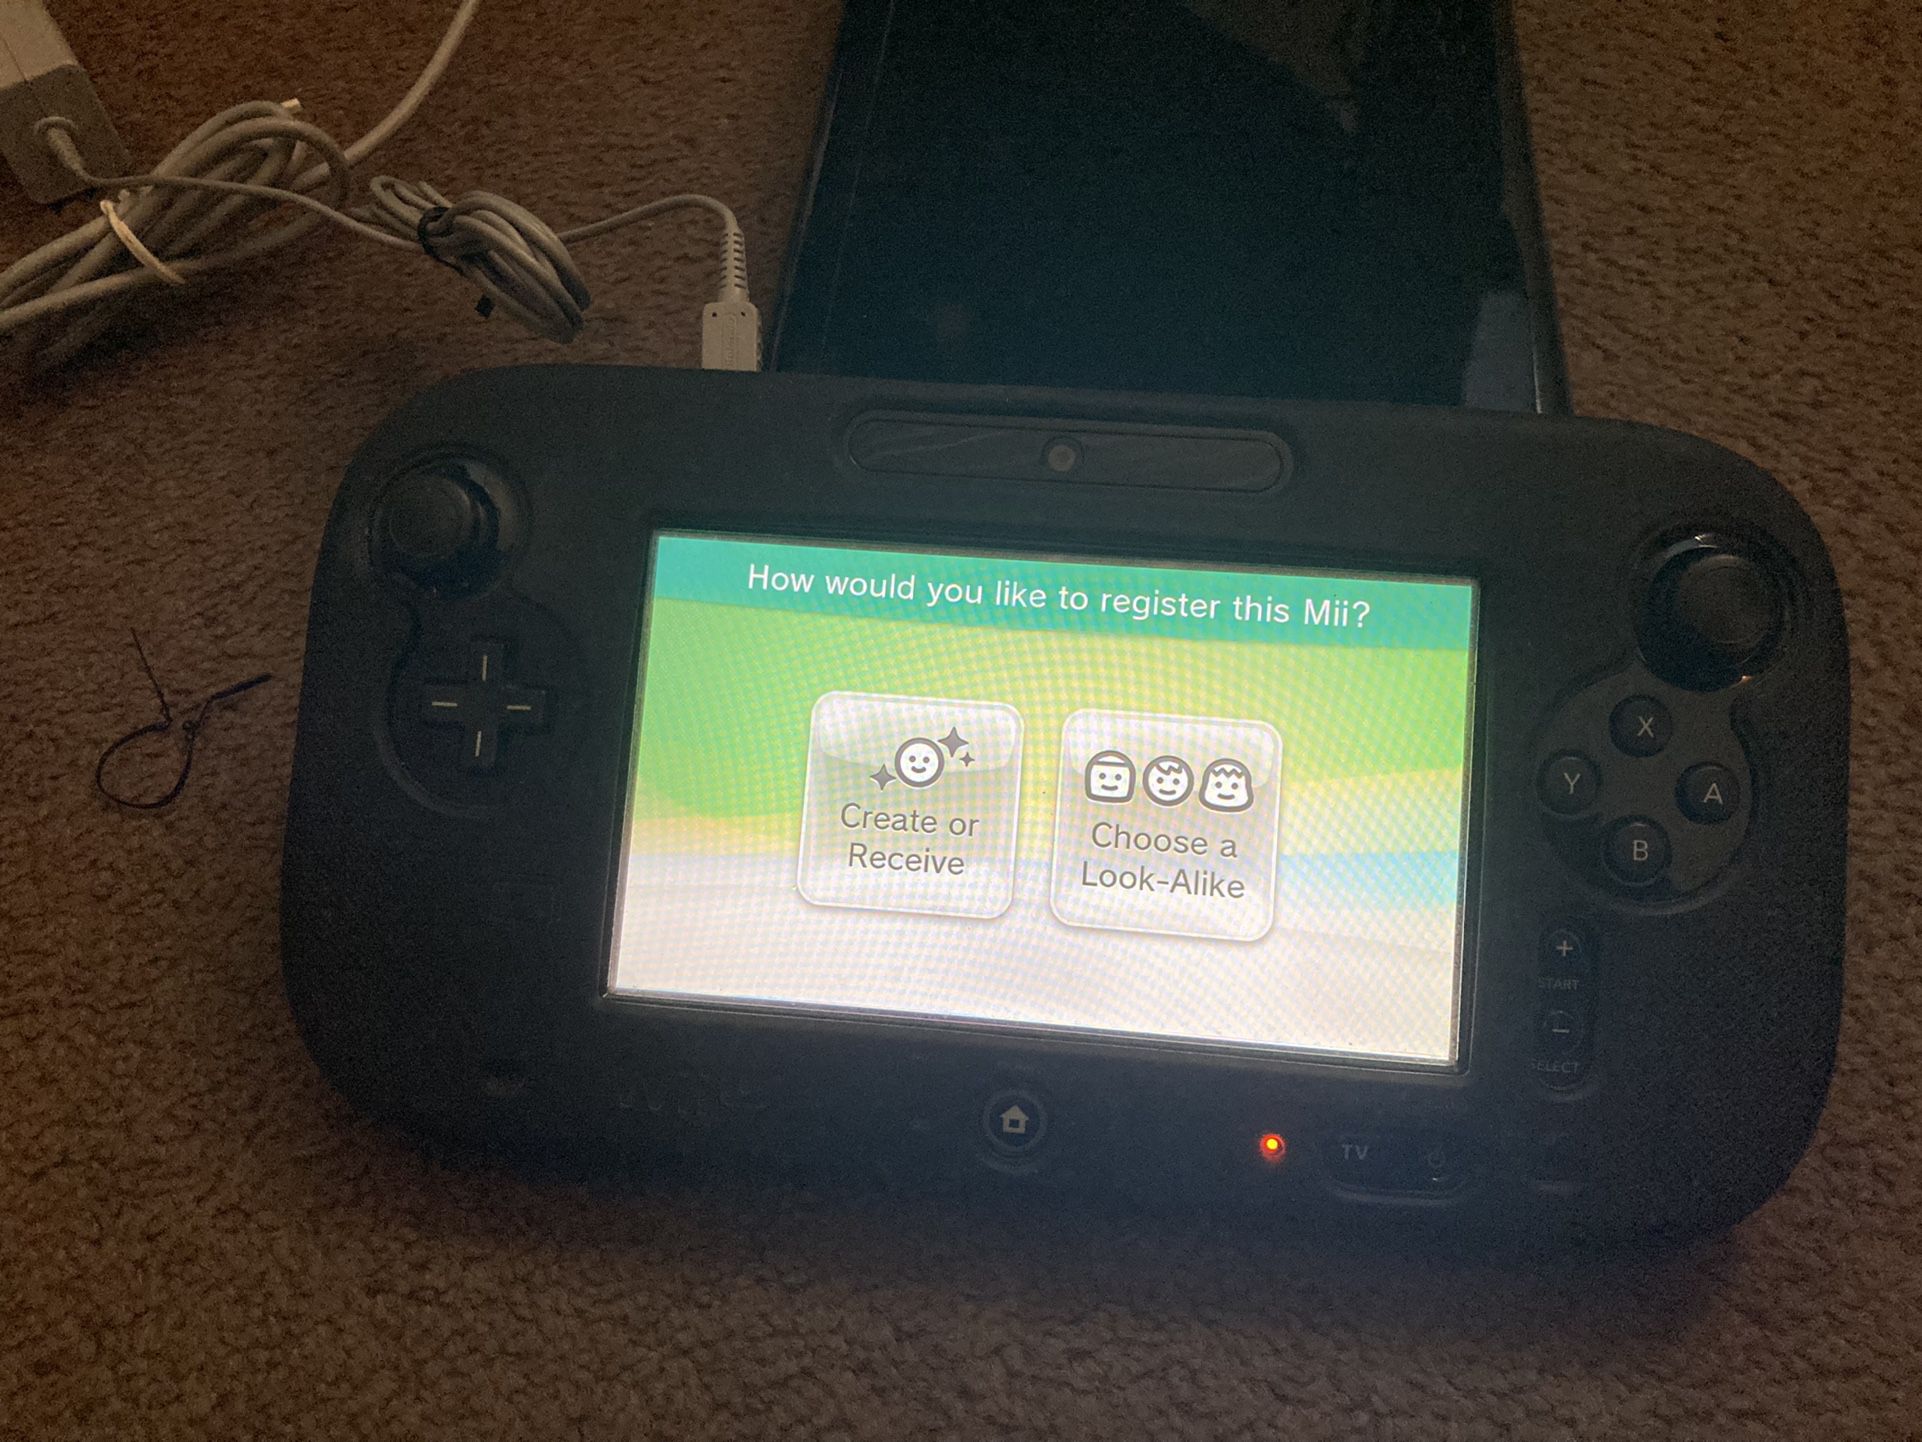 Nintendo Wii U black for Sale in Perris, CA - OfferUp